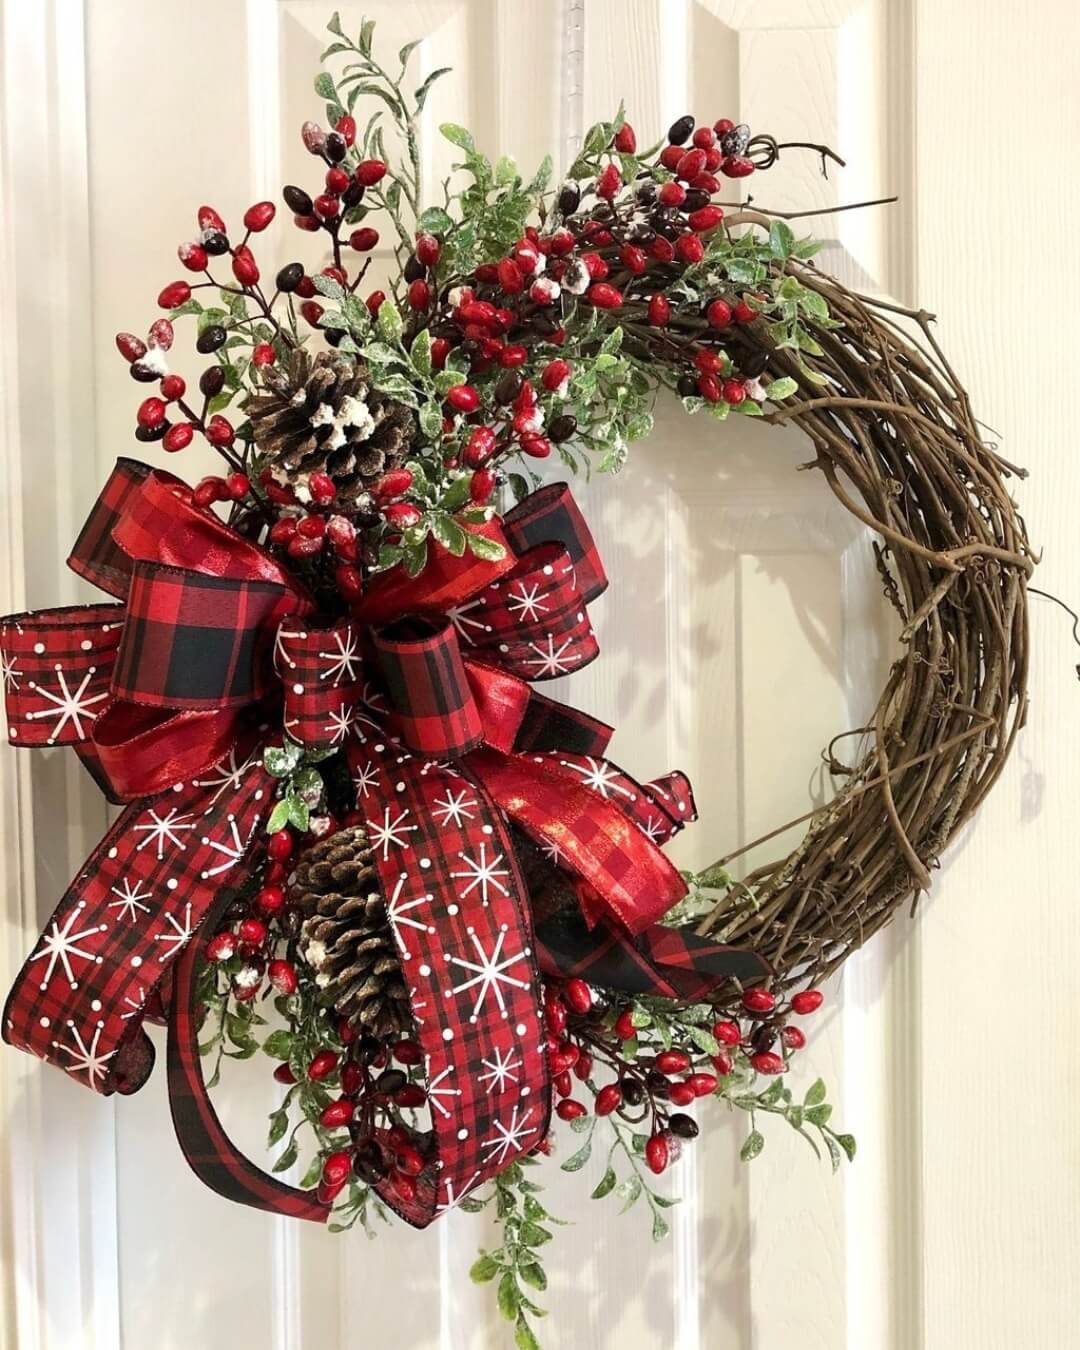 50 Pinecone Wreath Ideas That Will Amaze You